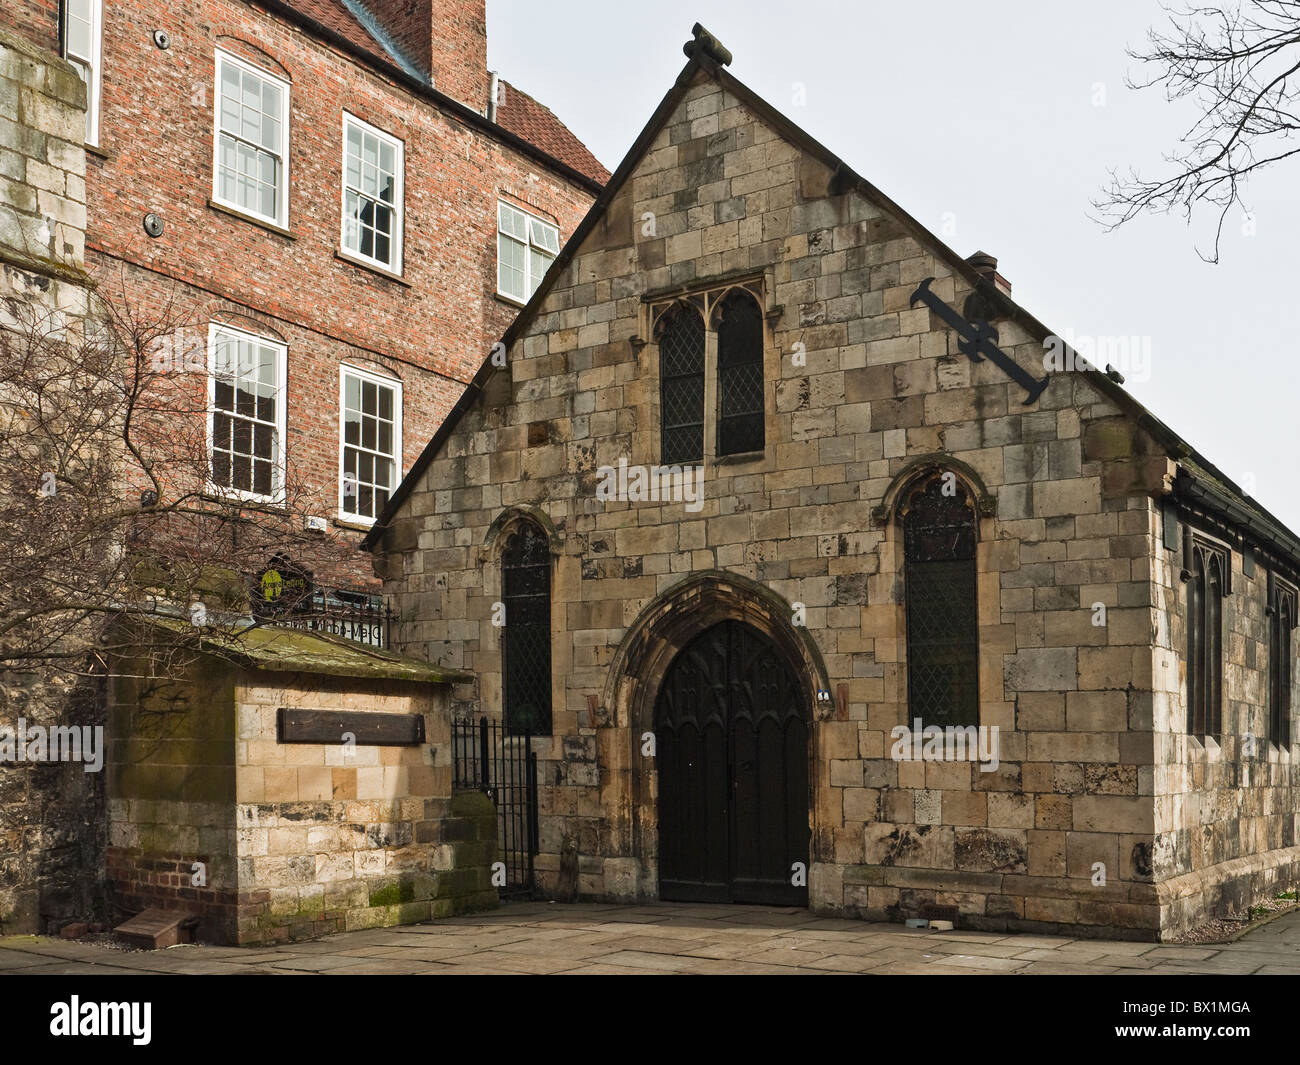 St Crux Parish Hall, Pavement, City of York, Yorkshire, UK Stock Photo